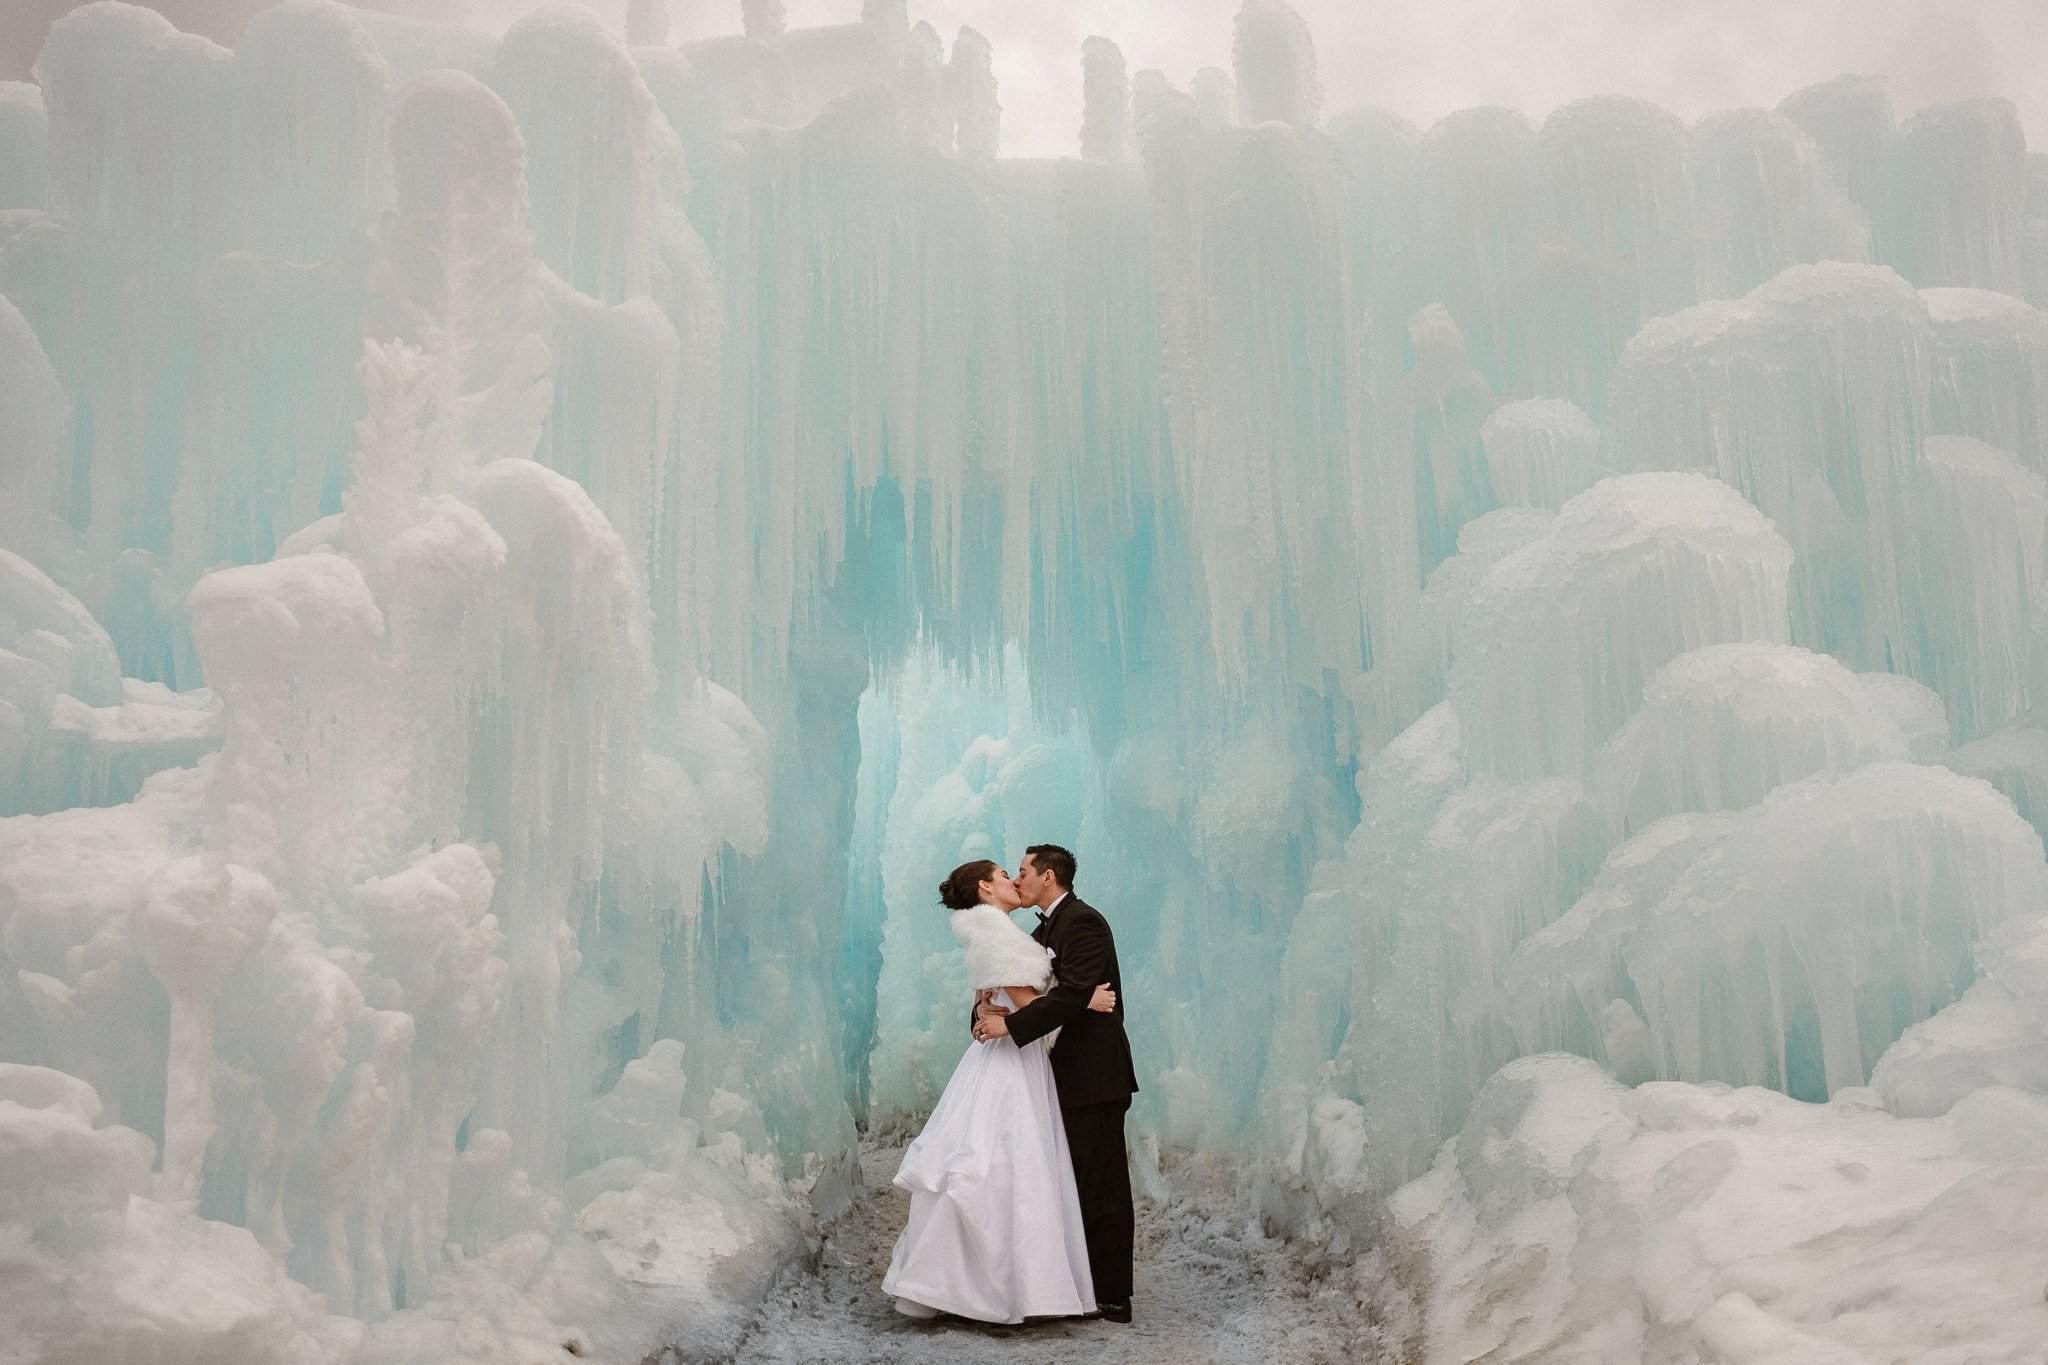 Ice Castles wedding photography, Dillon Colorado winter elopement, bride and groom inside ice castle